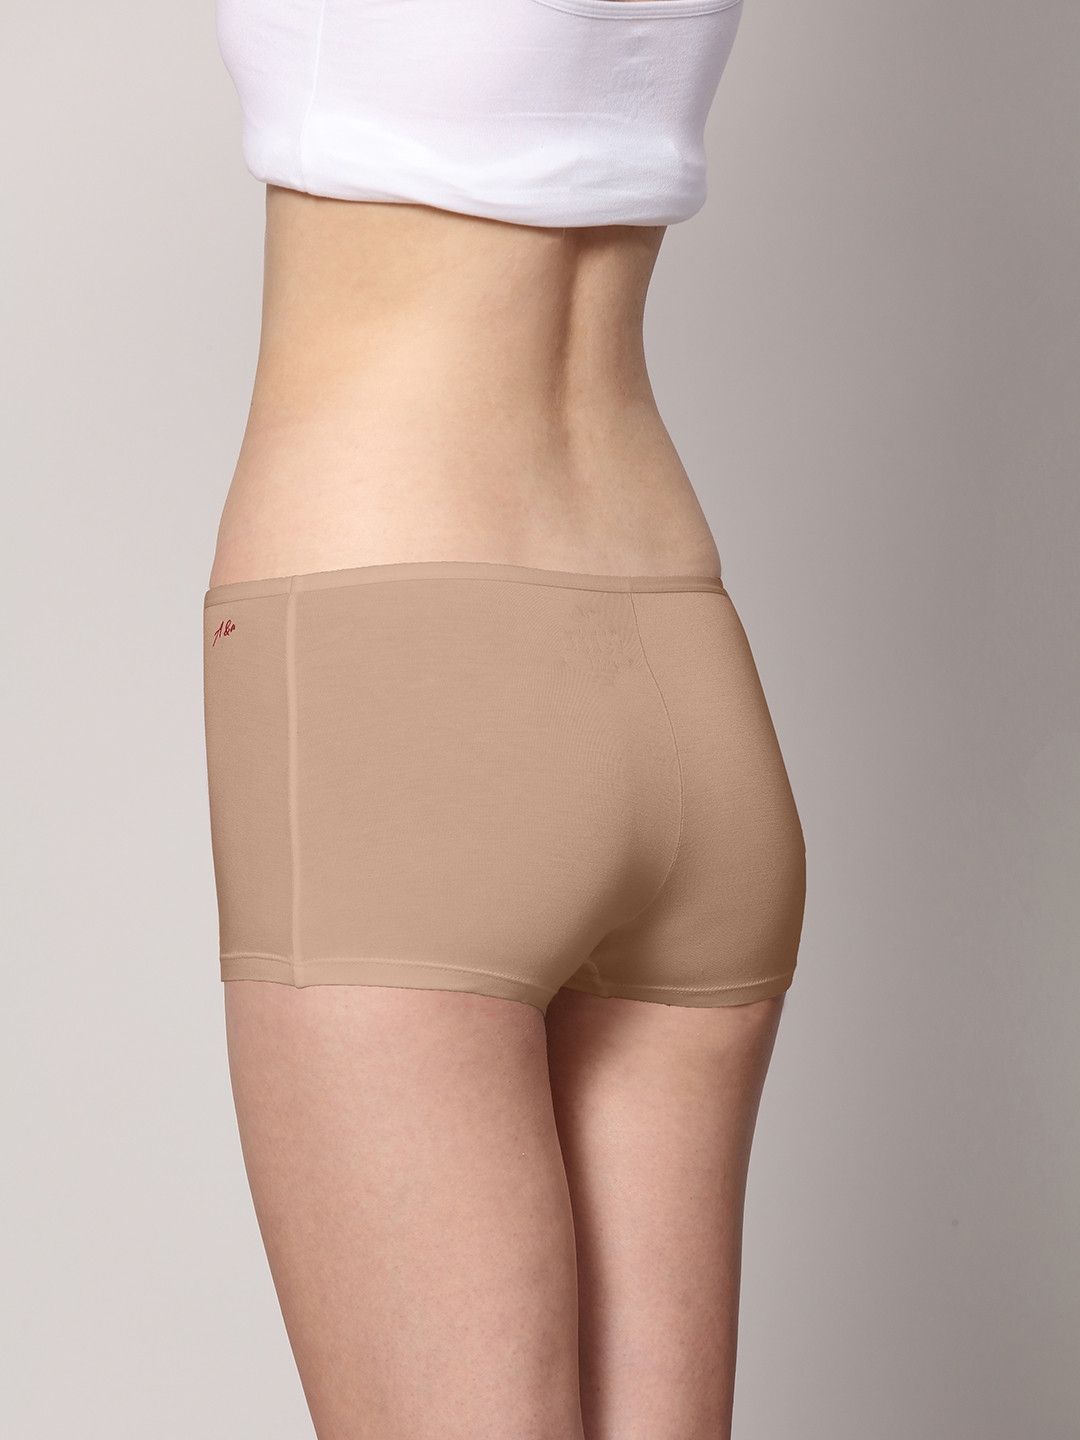 AshleyandAlvis | AshleyandAlvis Women's Panties Micro Modal, Anti Bacterial, Skinny Soft, Premium Boyshorts -No Itching, Sweat Proof, Double In-seam Gusset 3